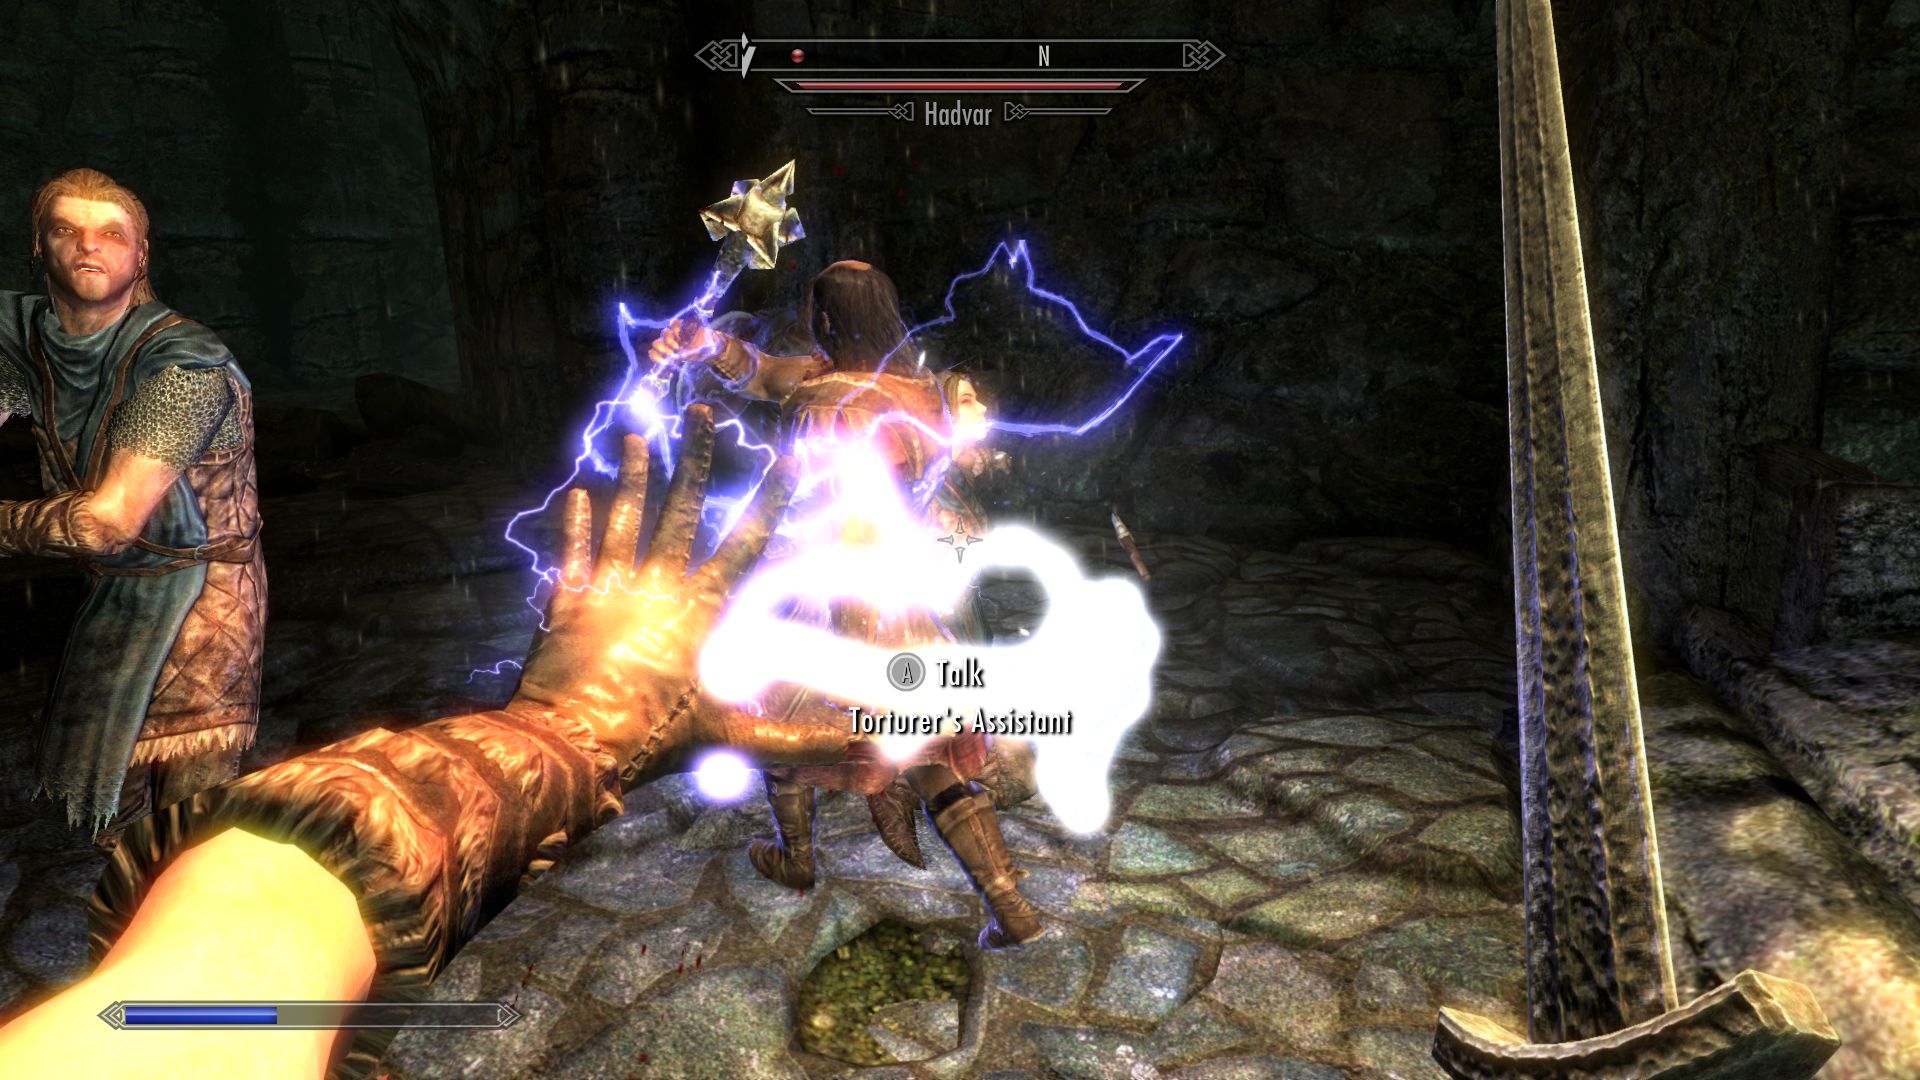 Shooting magic lightning at an enemy in The Elder Scrolls V: Skyrim